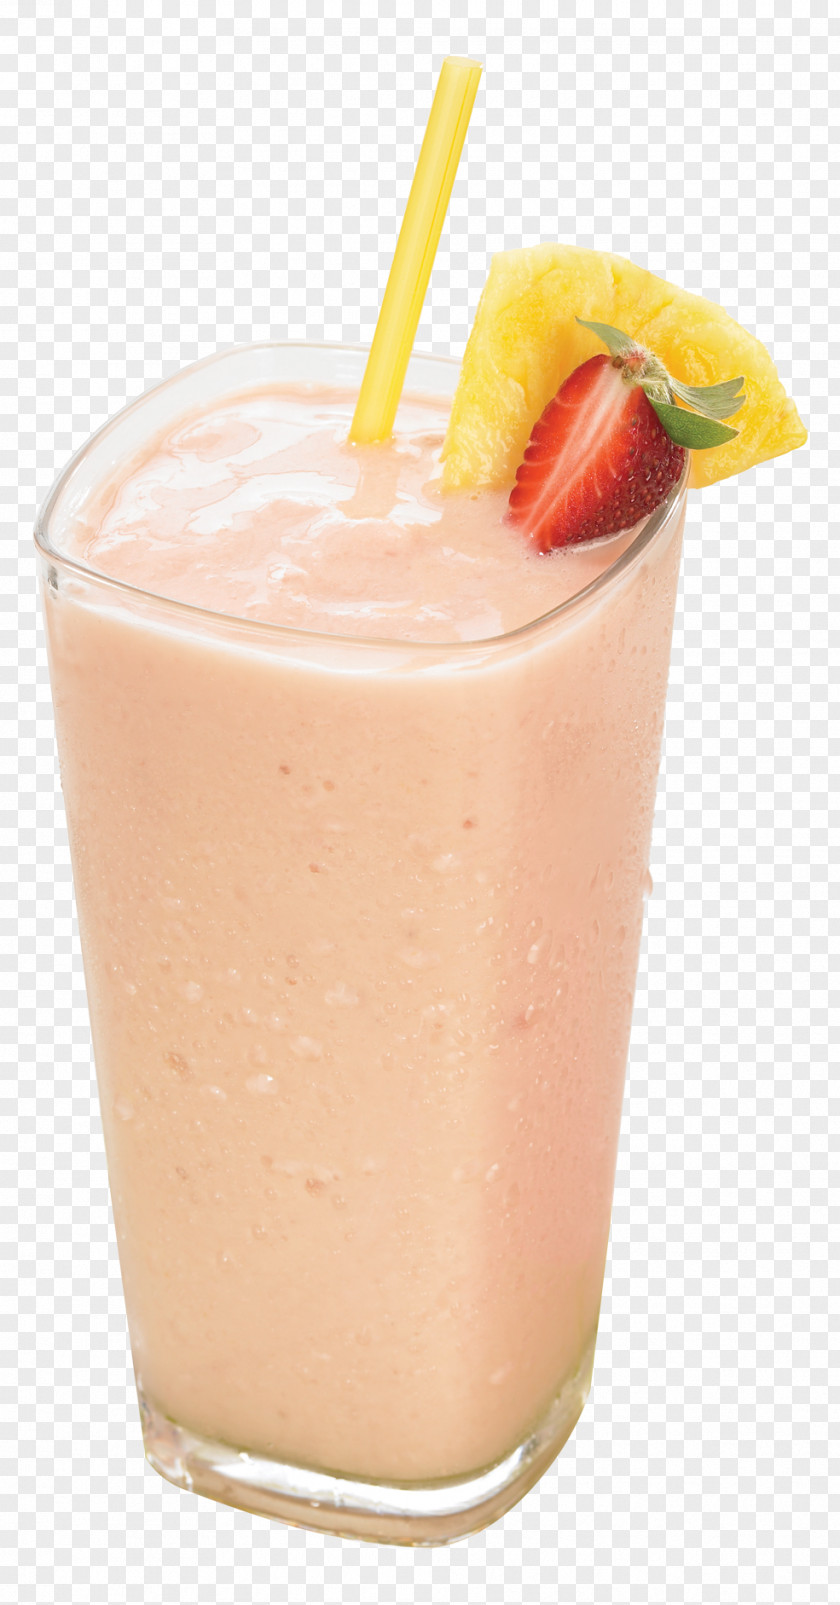 Strawberry Juice Smoothie Health Shake Milkshake Piña Colada PNG